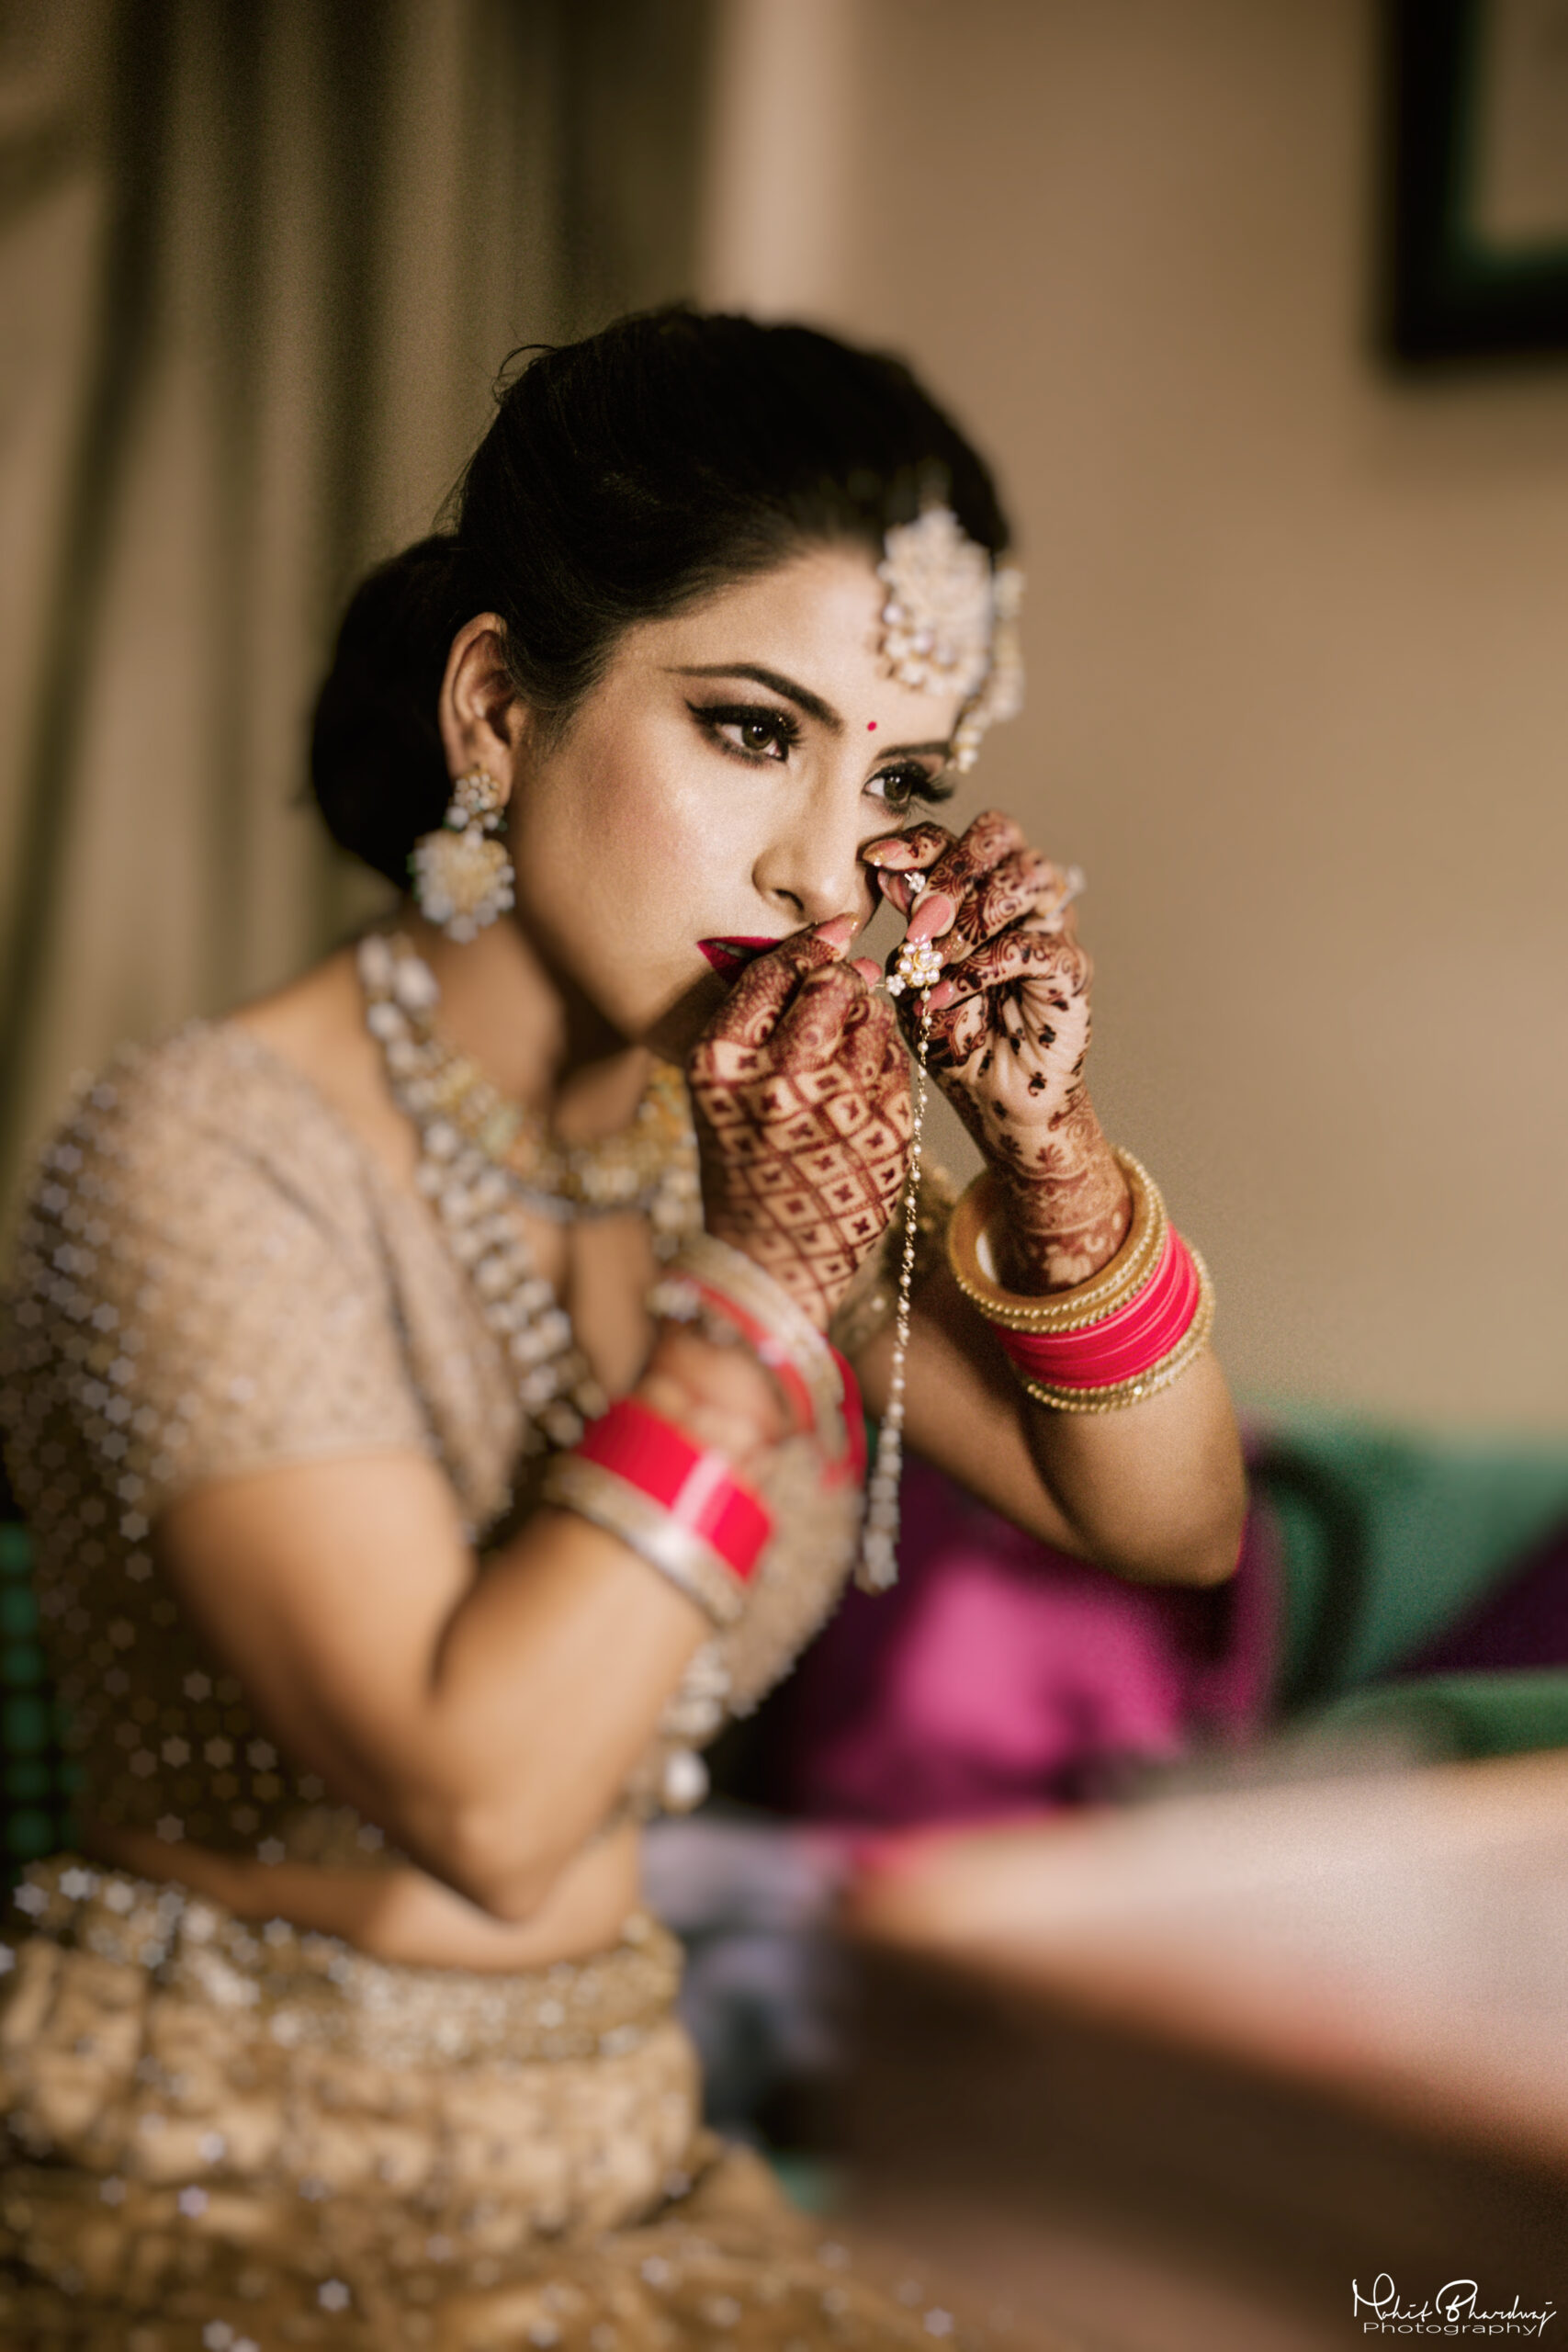 Best Bengali Wedding Photography in Kolkata - Rig Photography